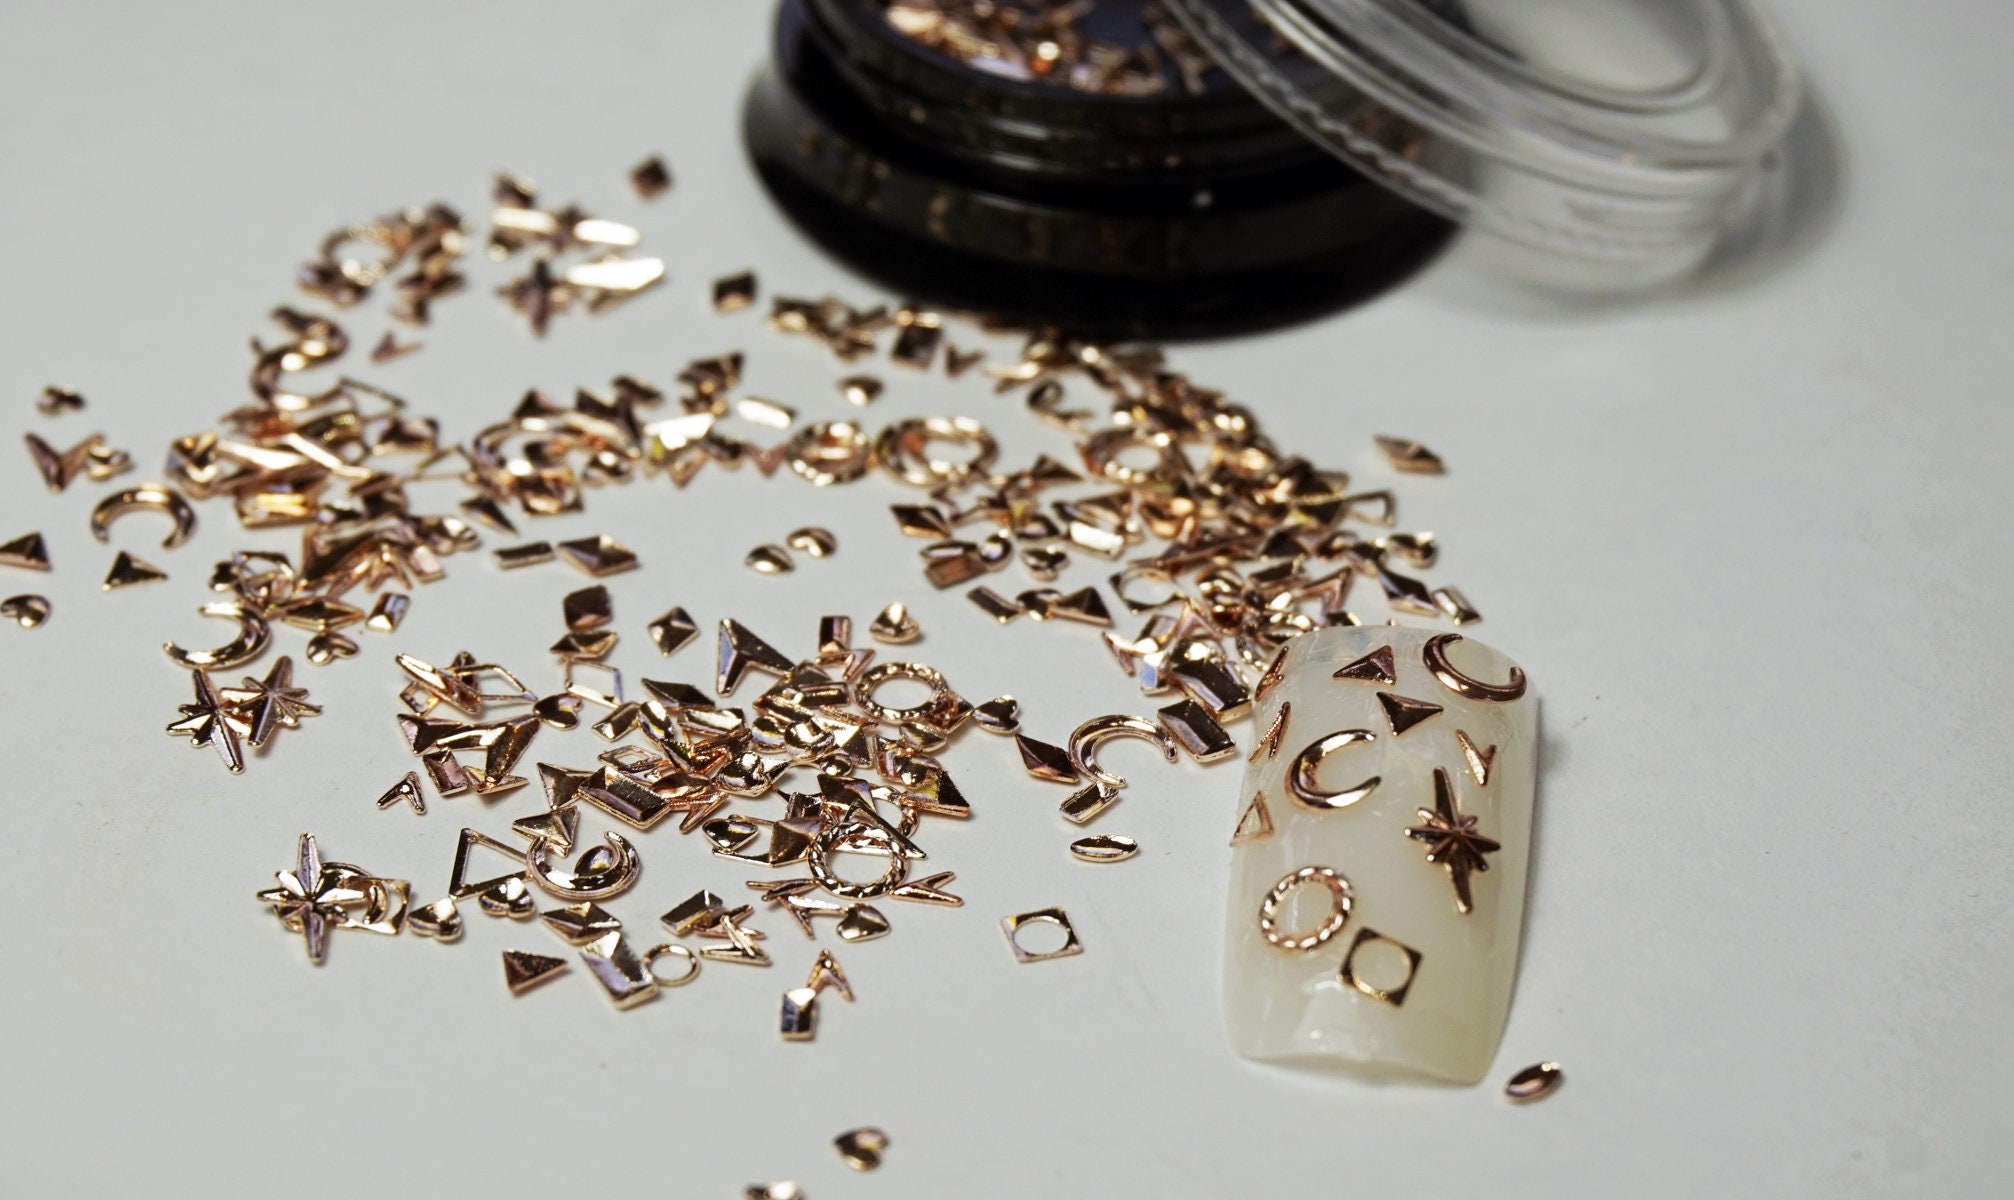 Rose GOLD METAL CHARMS for Nails, Reusable Nail Charms, 3D Nail